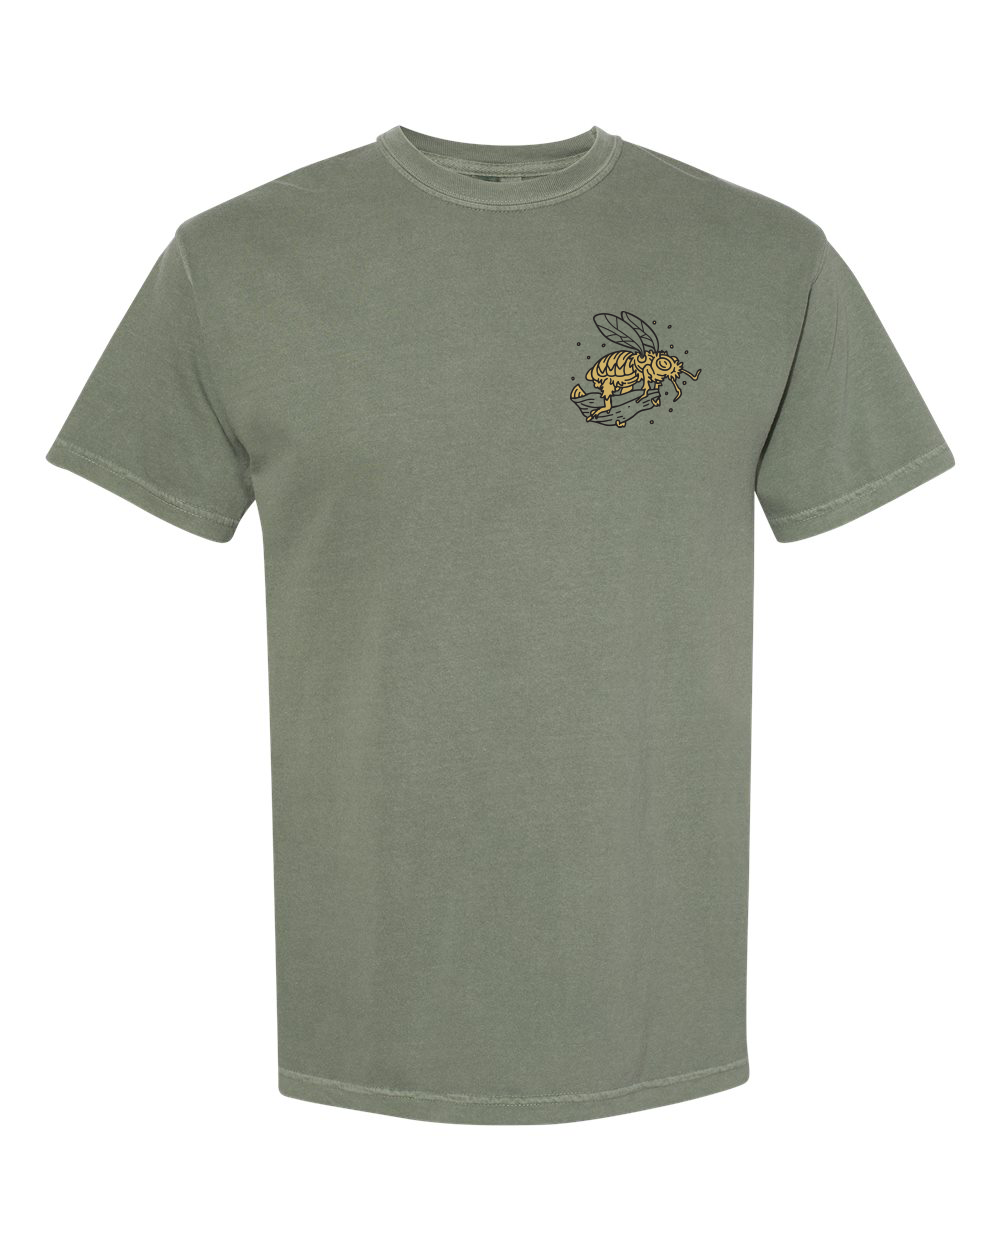 Super Pollinator Short Sleeve T-Shirt